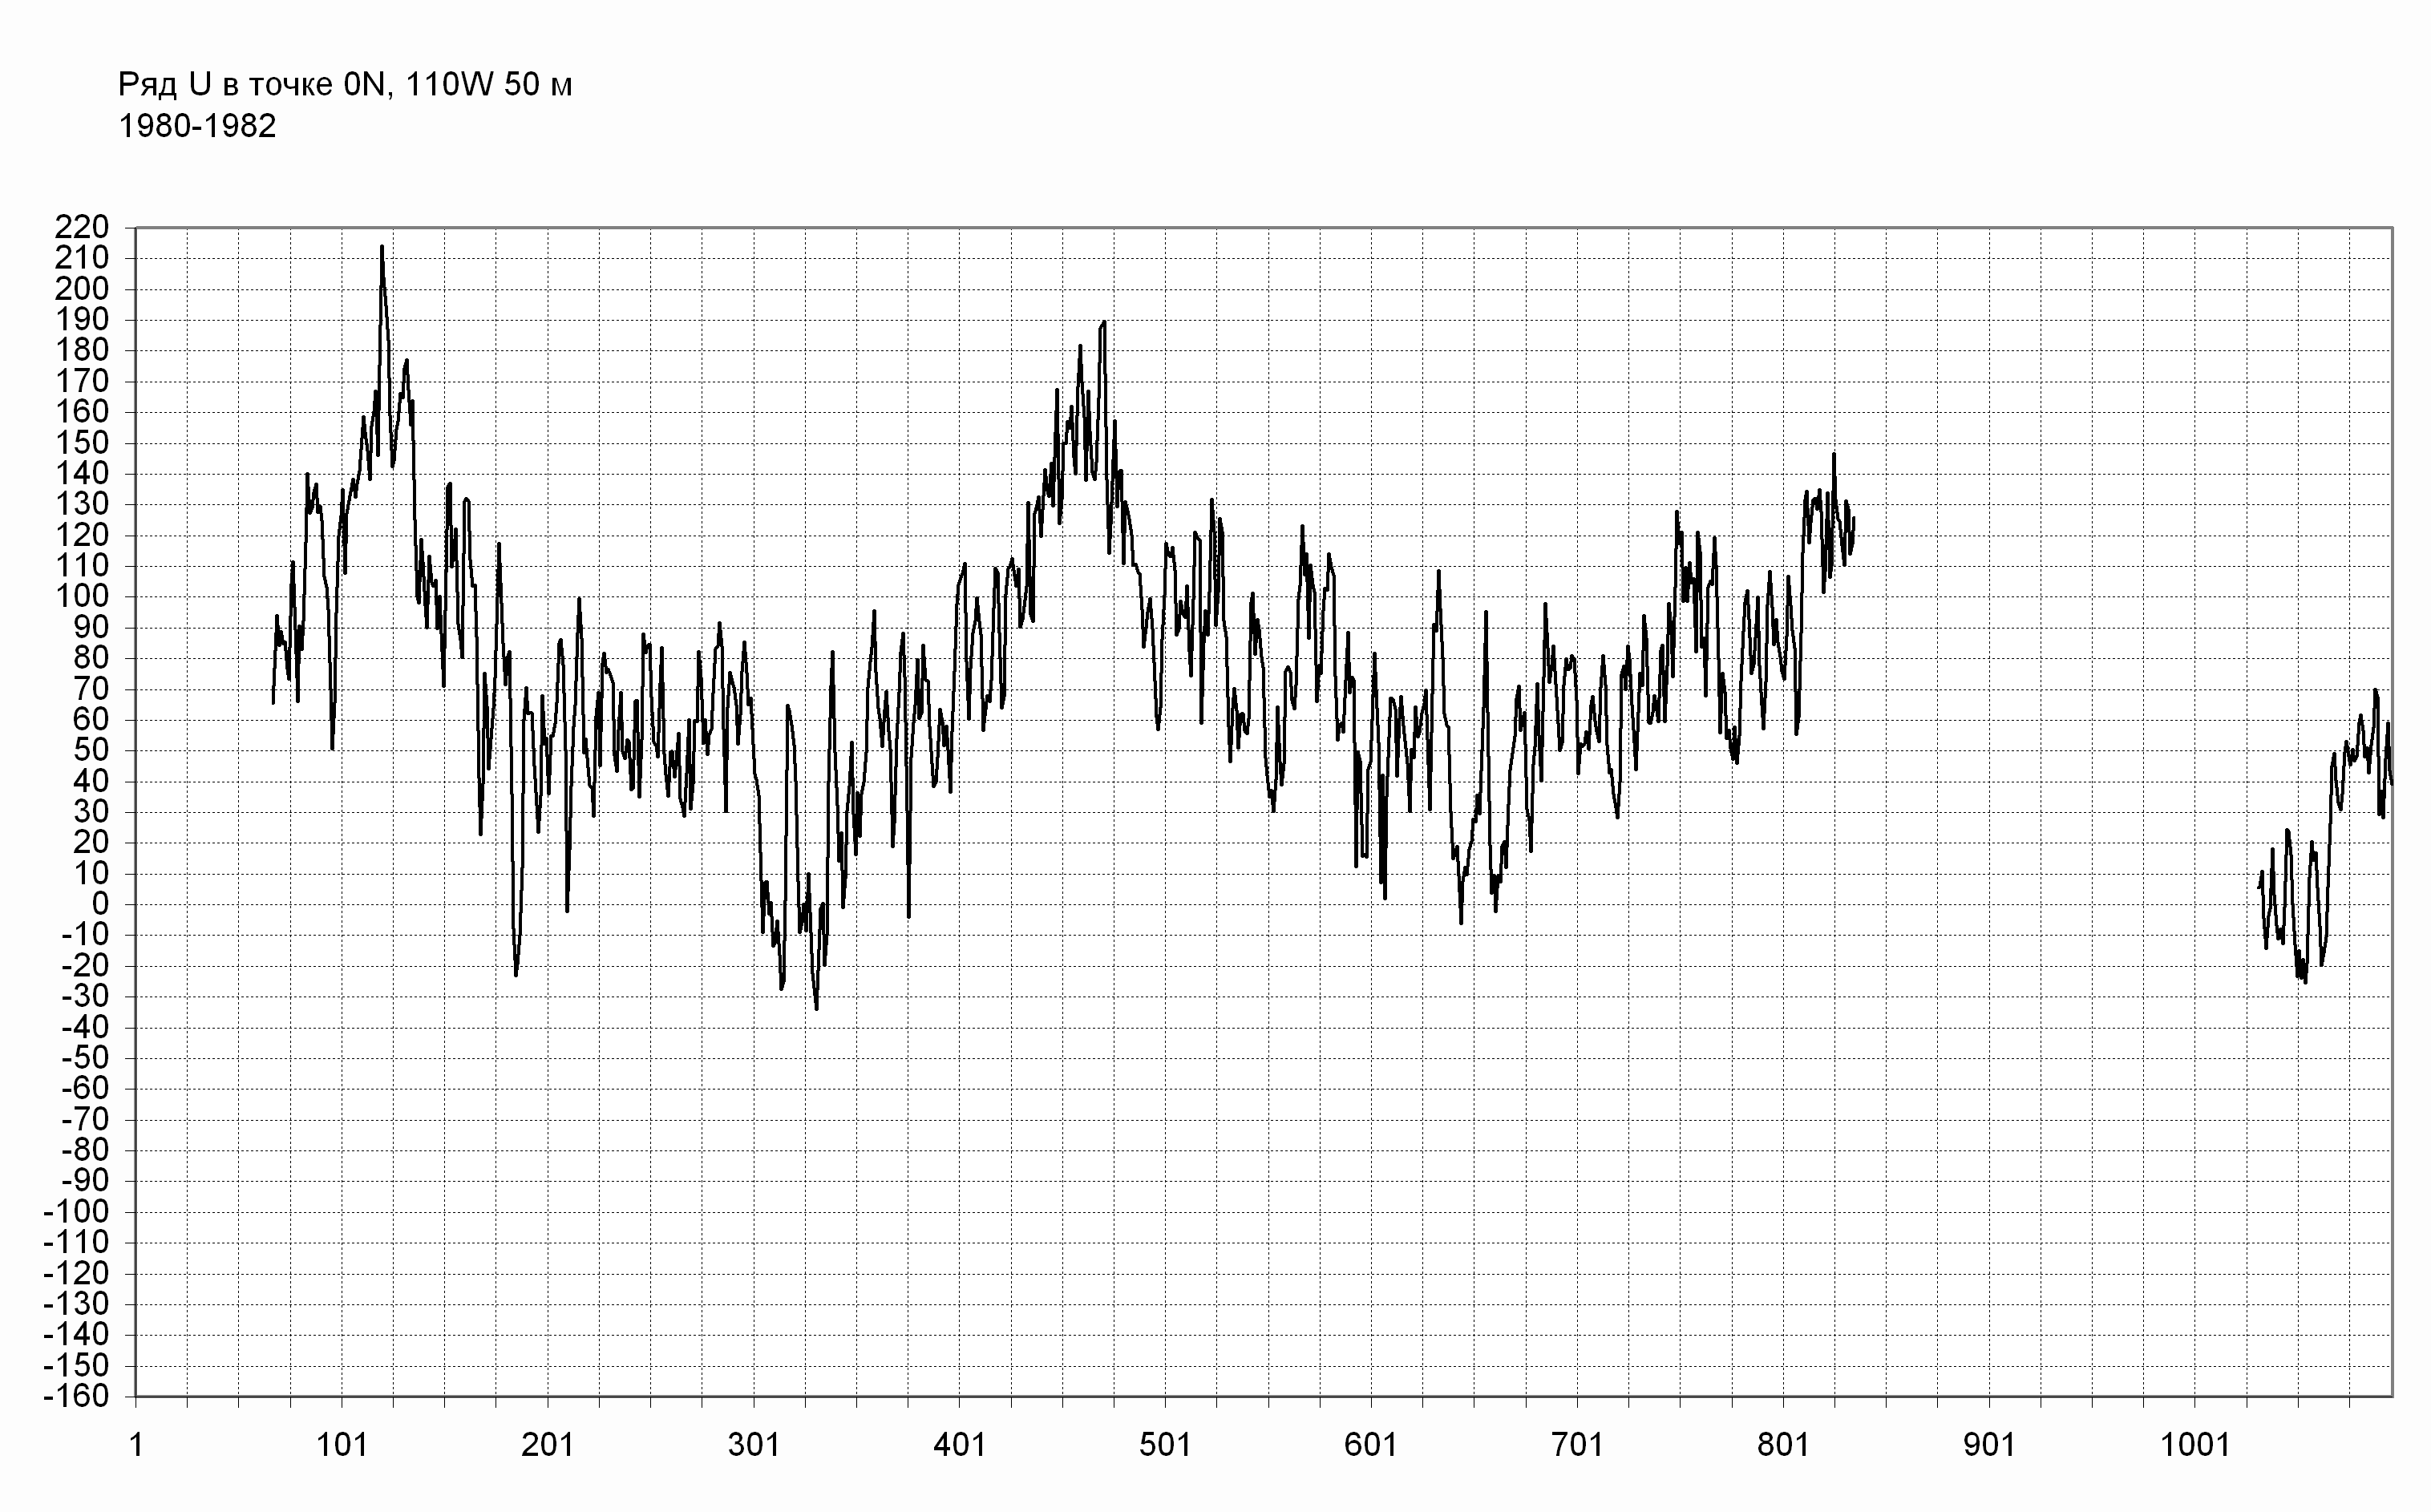 Пример измерения течения на экваторе Тихого океана в пункте 
0°, 110° W, на глубине 10 м., зональная компонента (W - E)